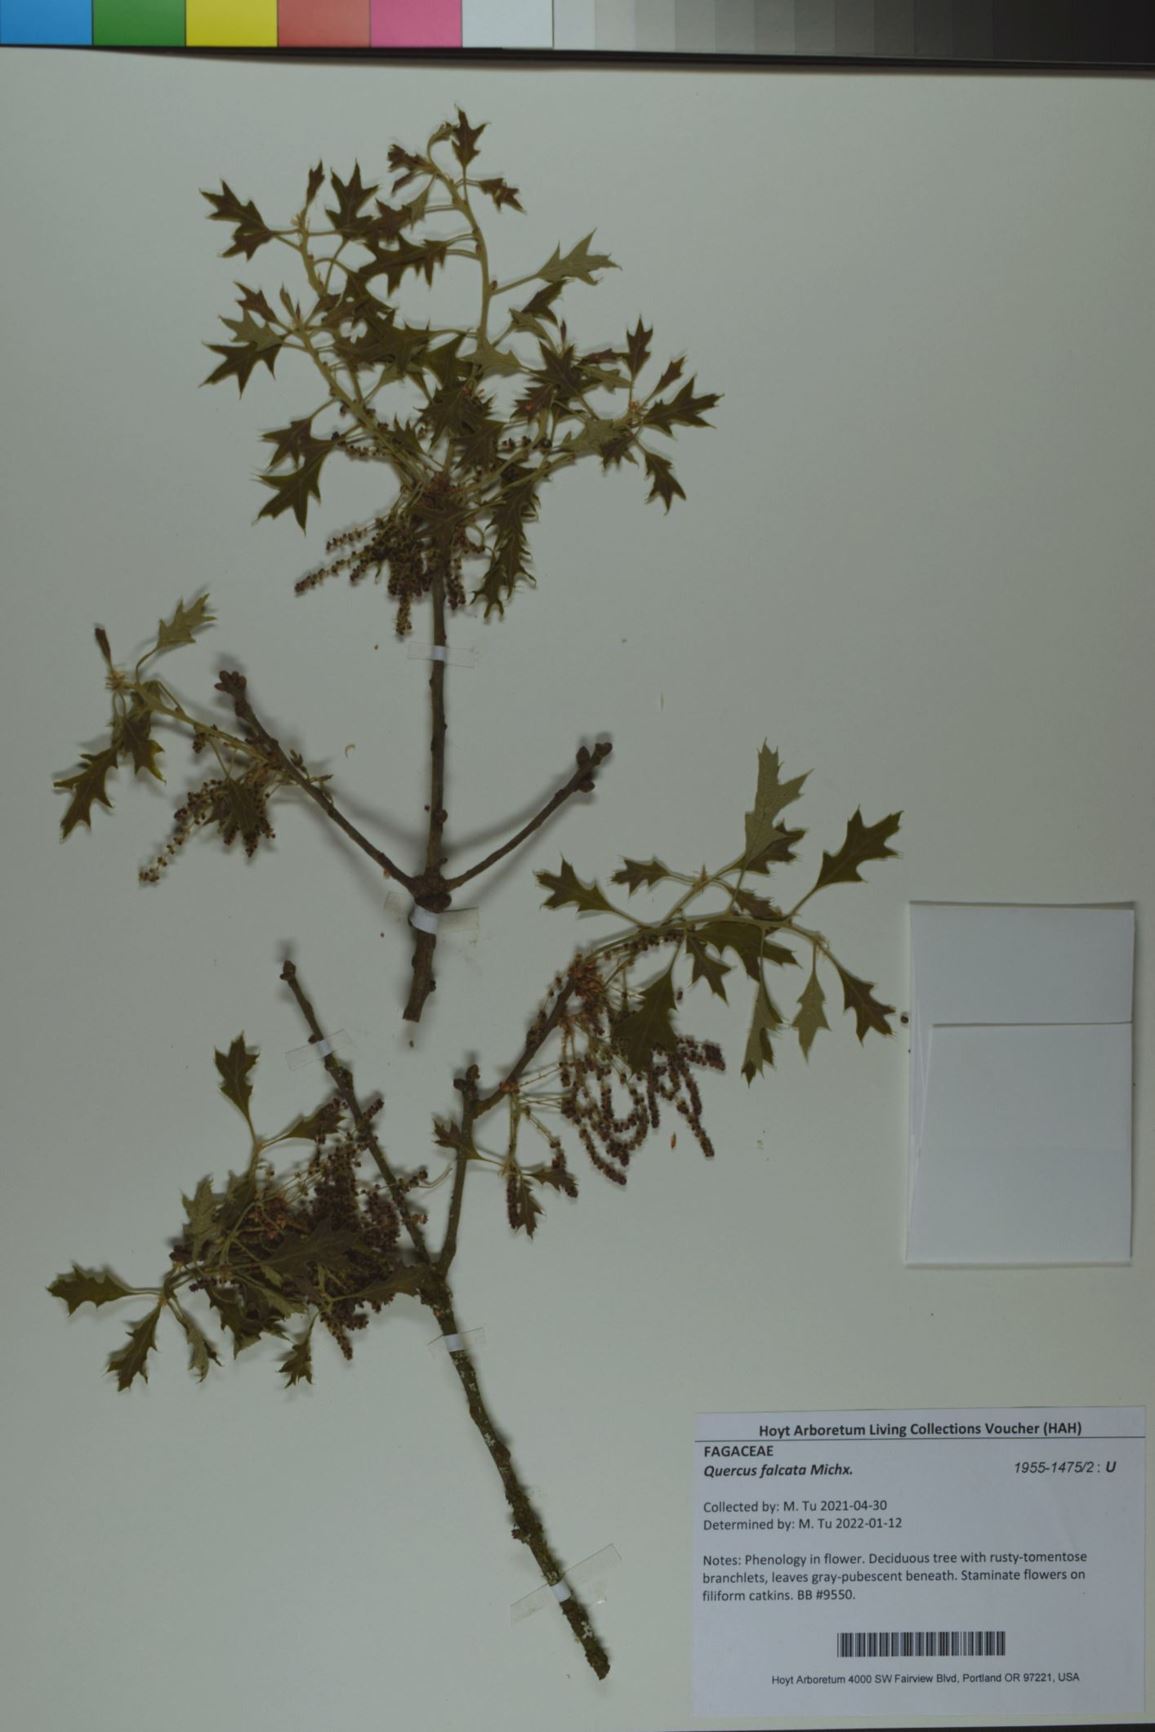 Quercus falcata - Southern Red Oak